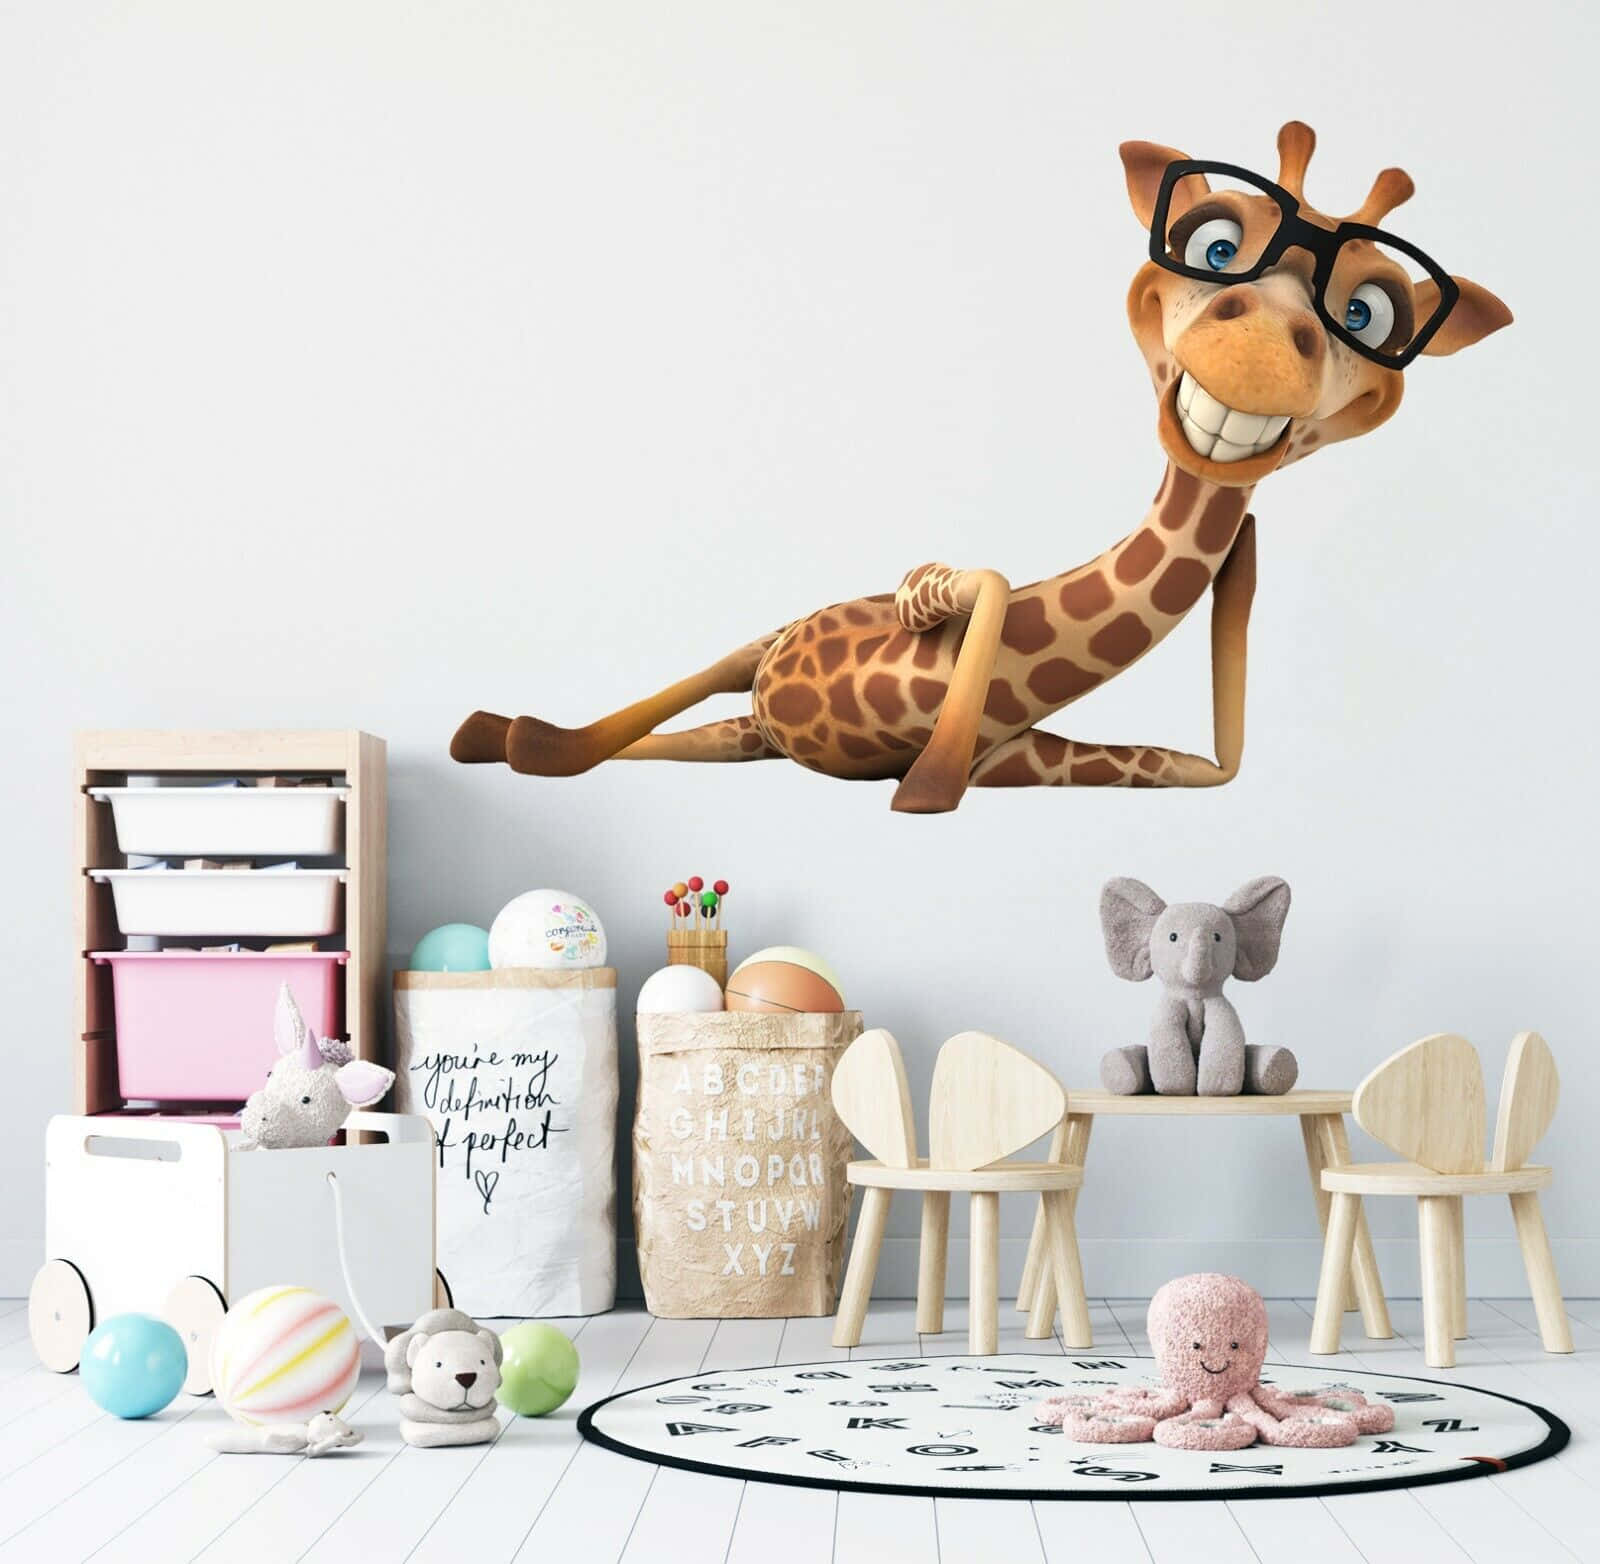 Cute Giraffe In A Kids Room Wallpaper